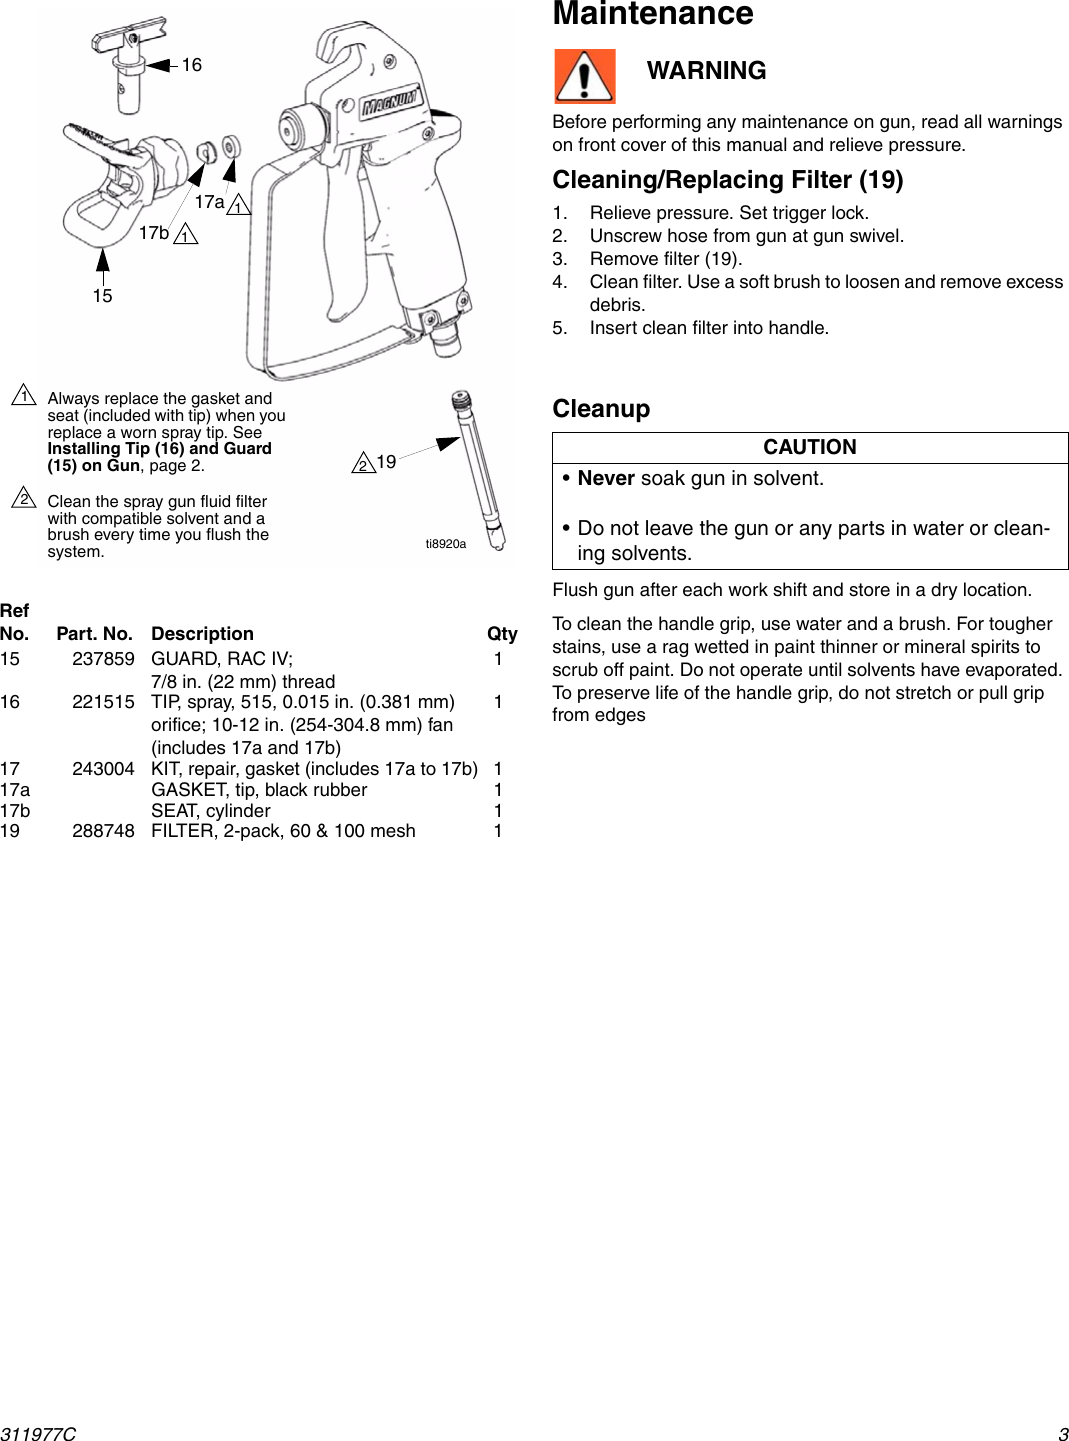 Page 3 of 4 - Graco-Inc Graco-Inc-255107-Users-Manual- 311977C, SG10 Spray Guns, Instructions, Parts, U.S. English  Graco-inc-255107-users-manual